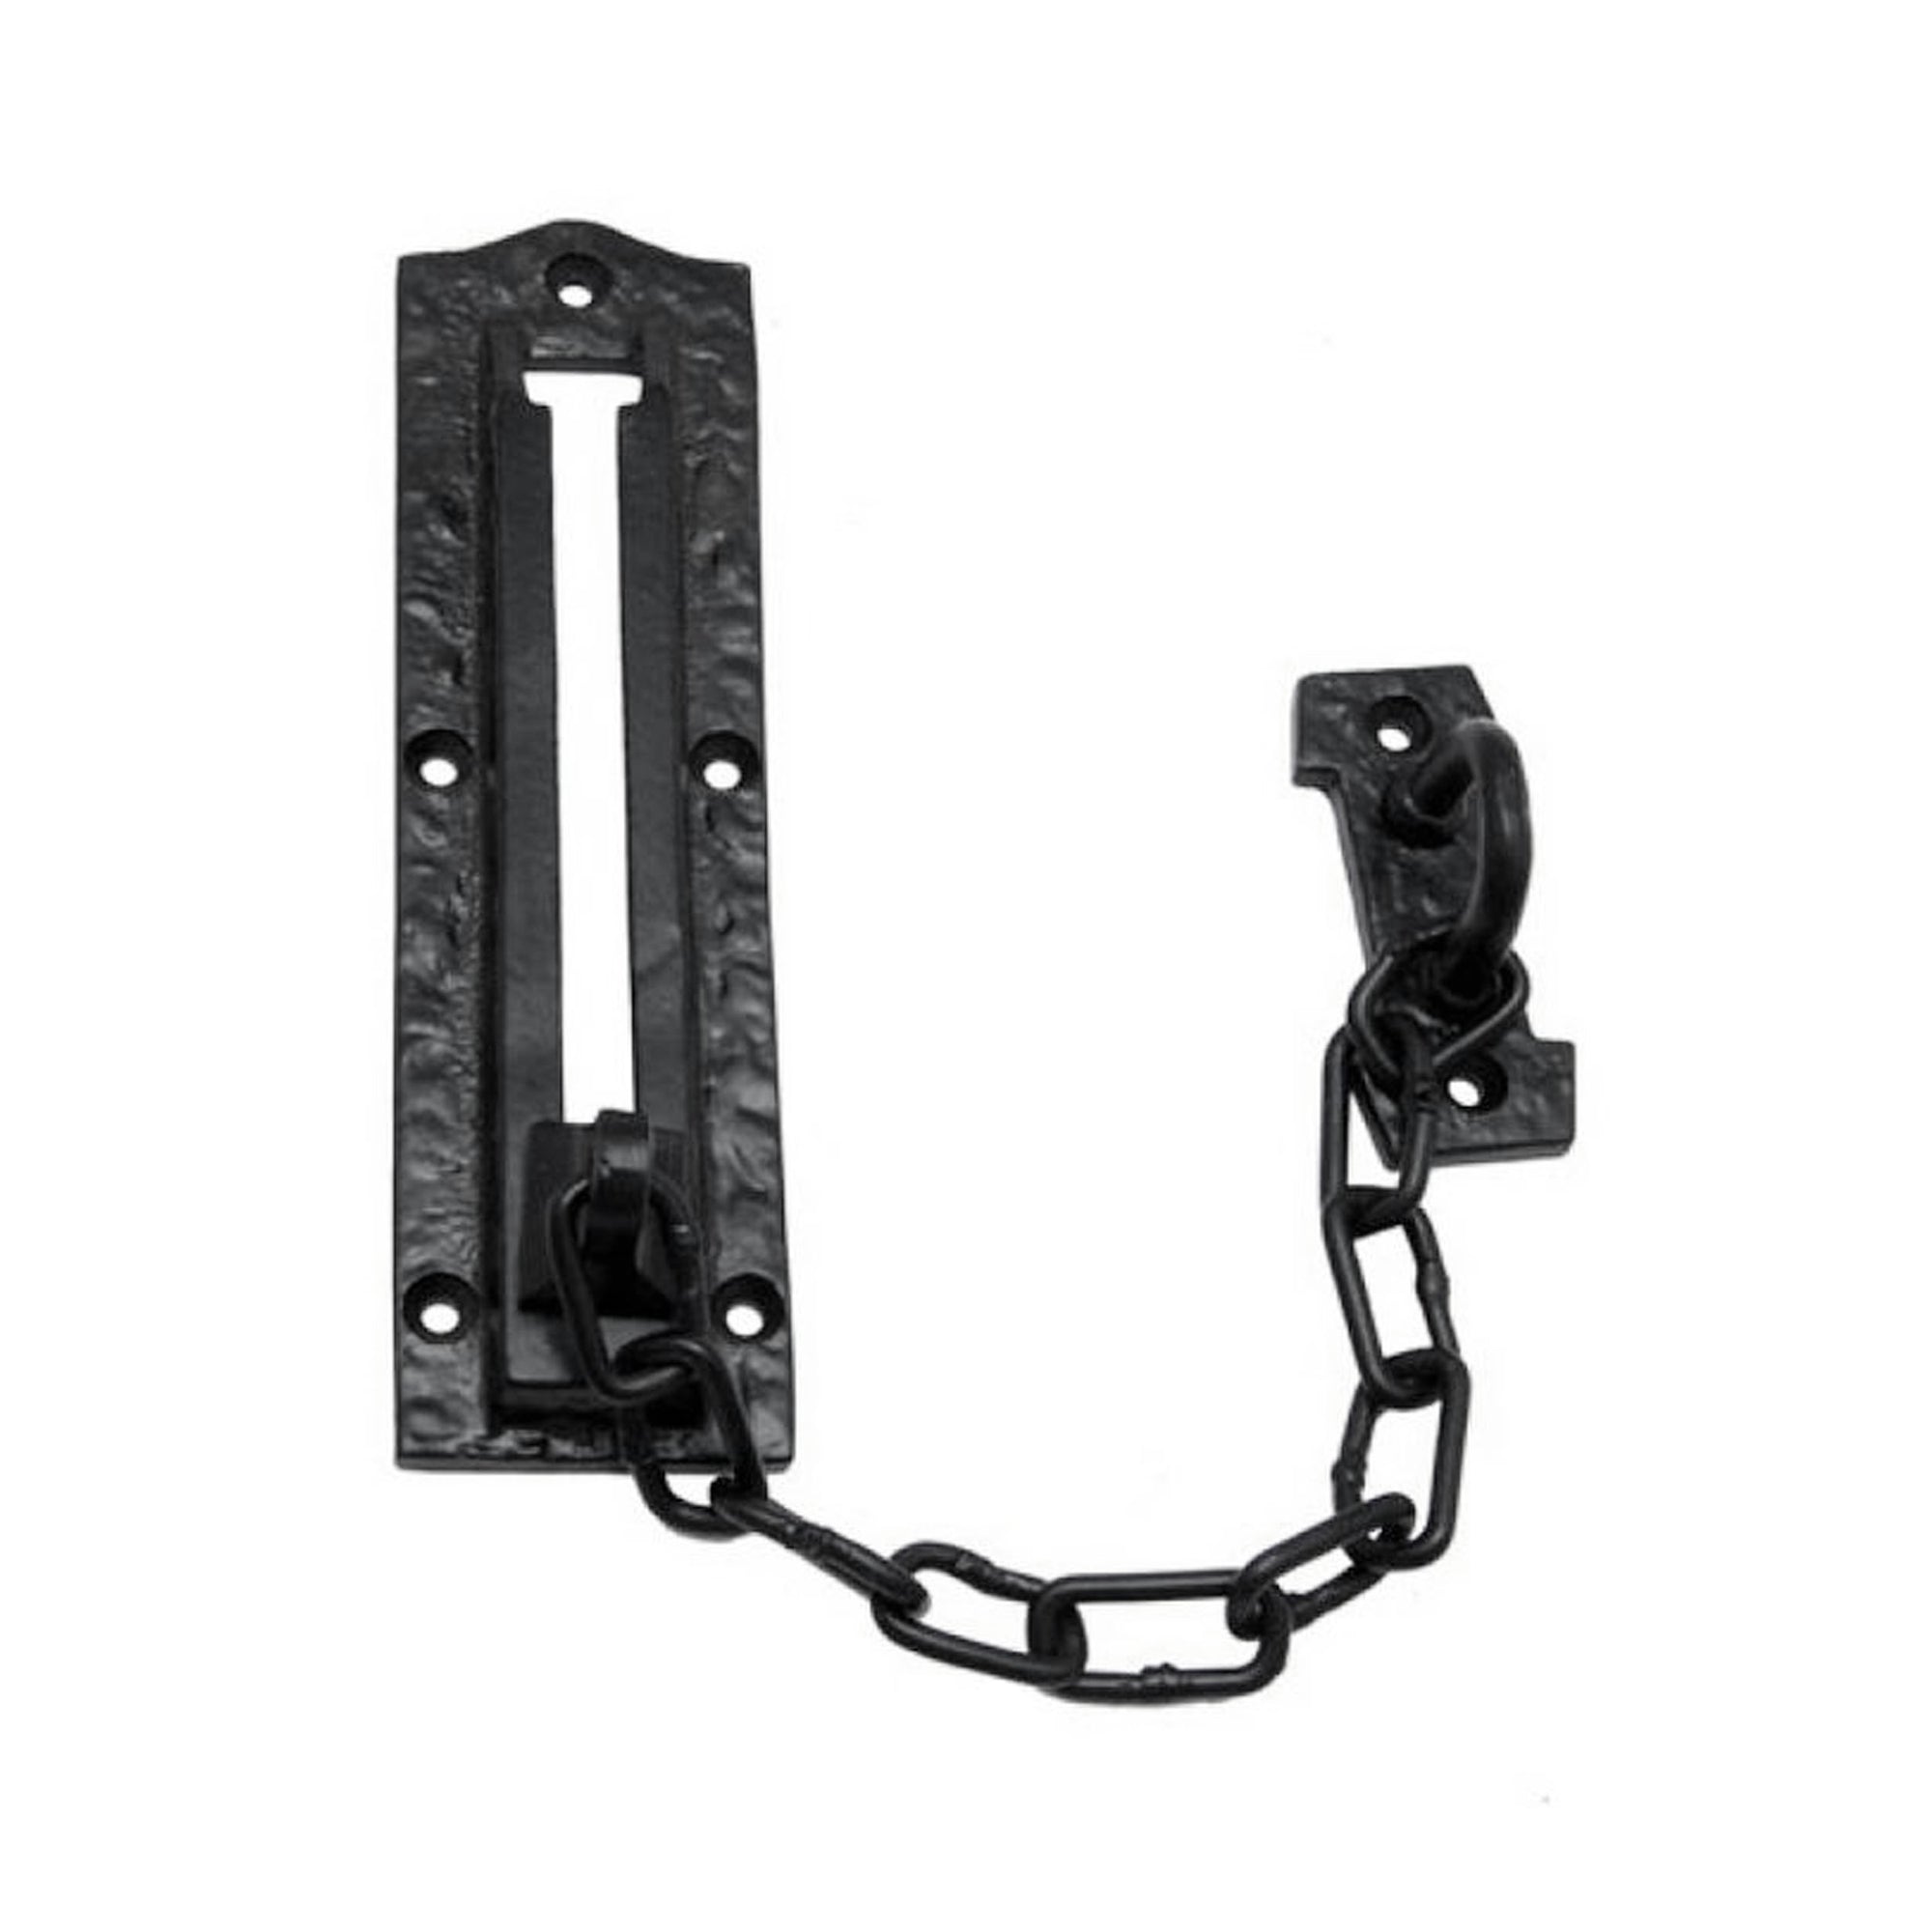 154mm x 41mm Iron Security Door Chain - Black Powder Coated